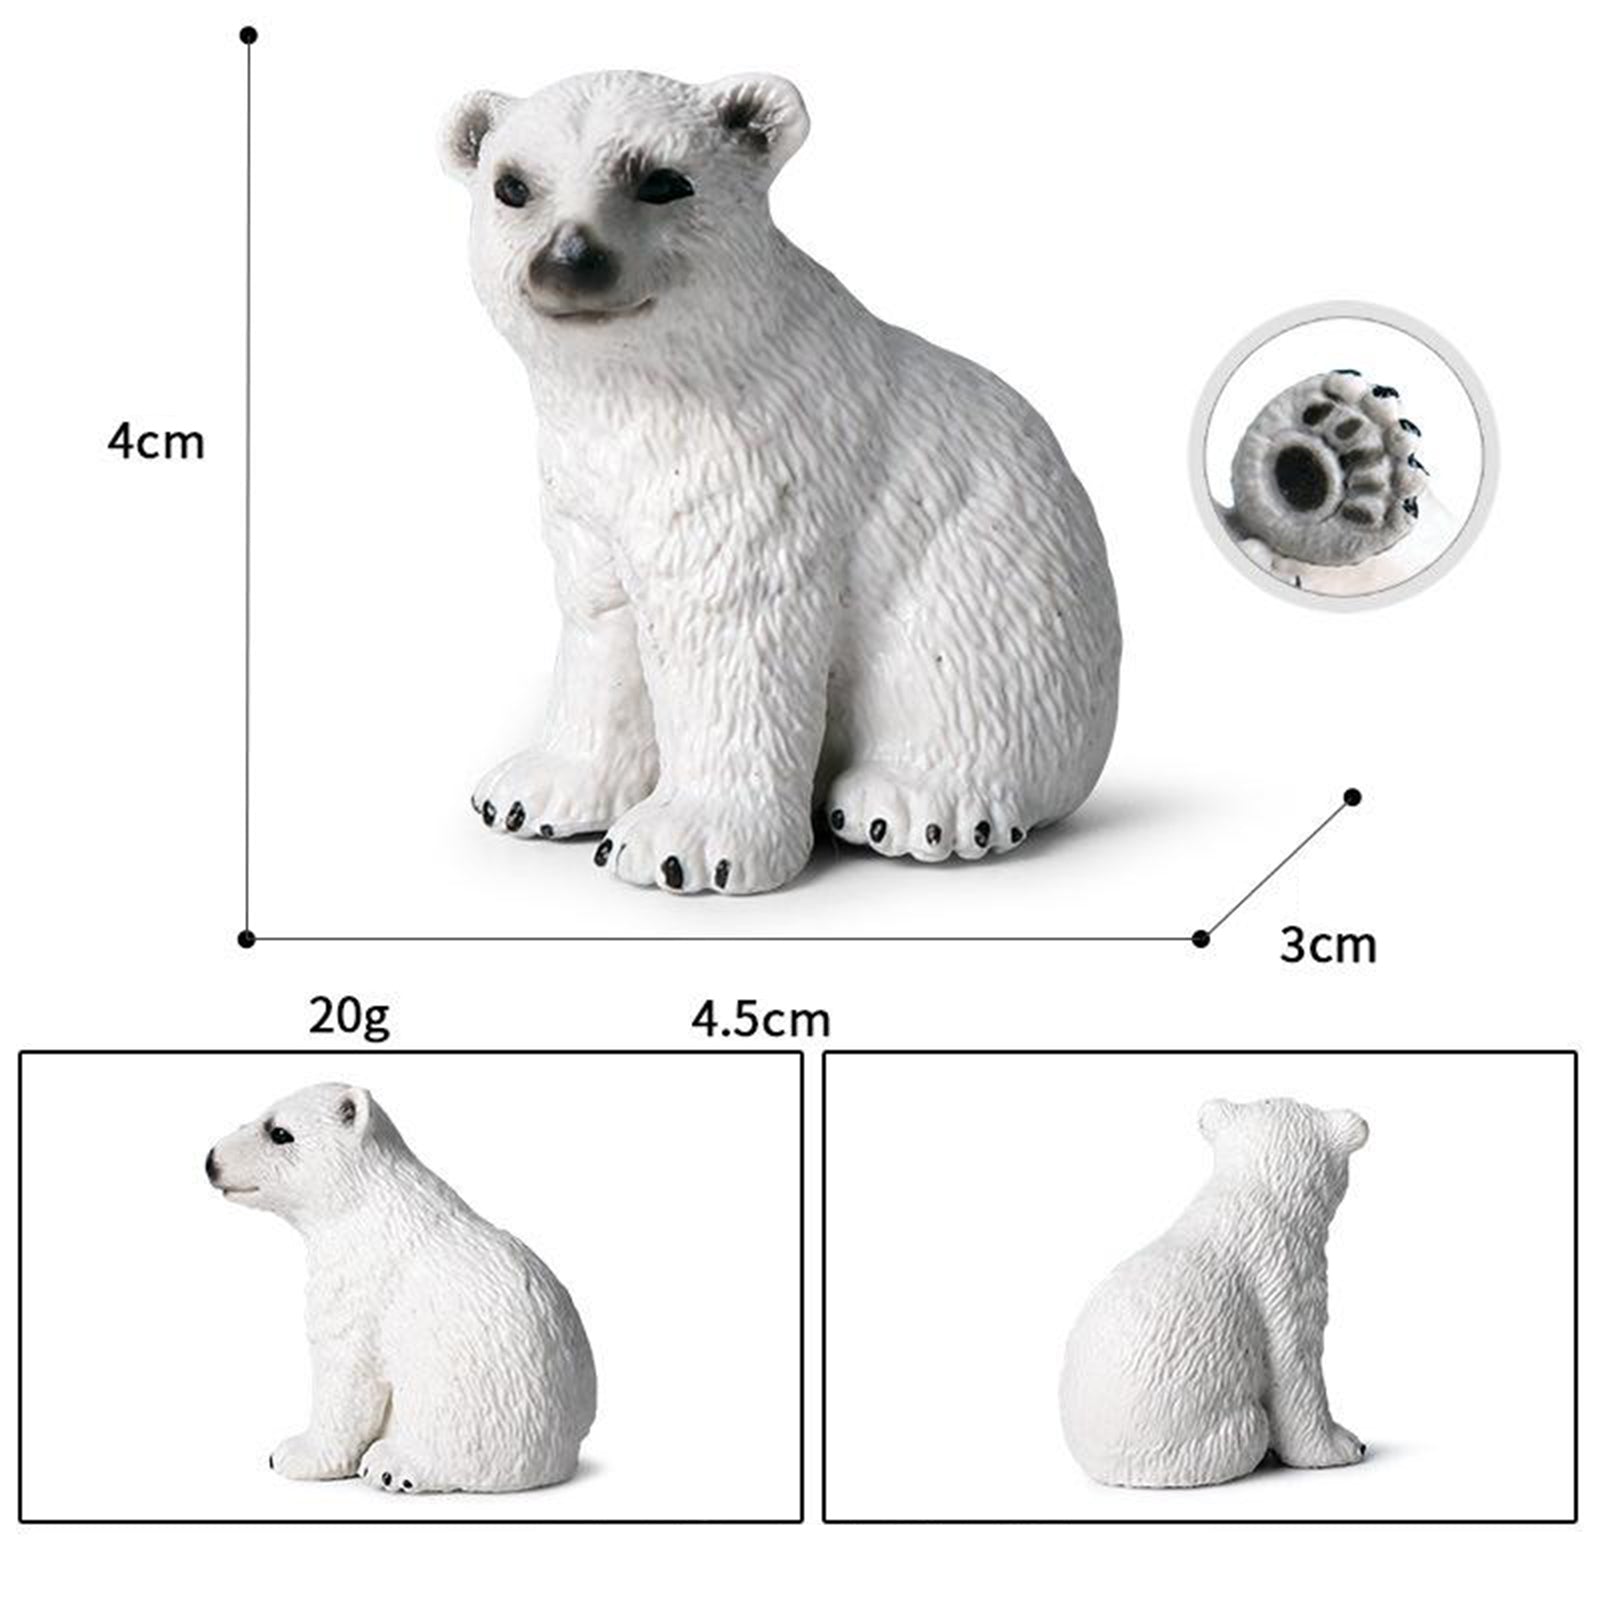 Lifelike Polar Animals Figure Wildlife Animal Kids Educational Learning Toy